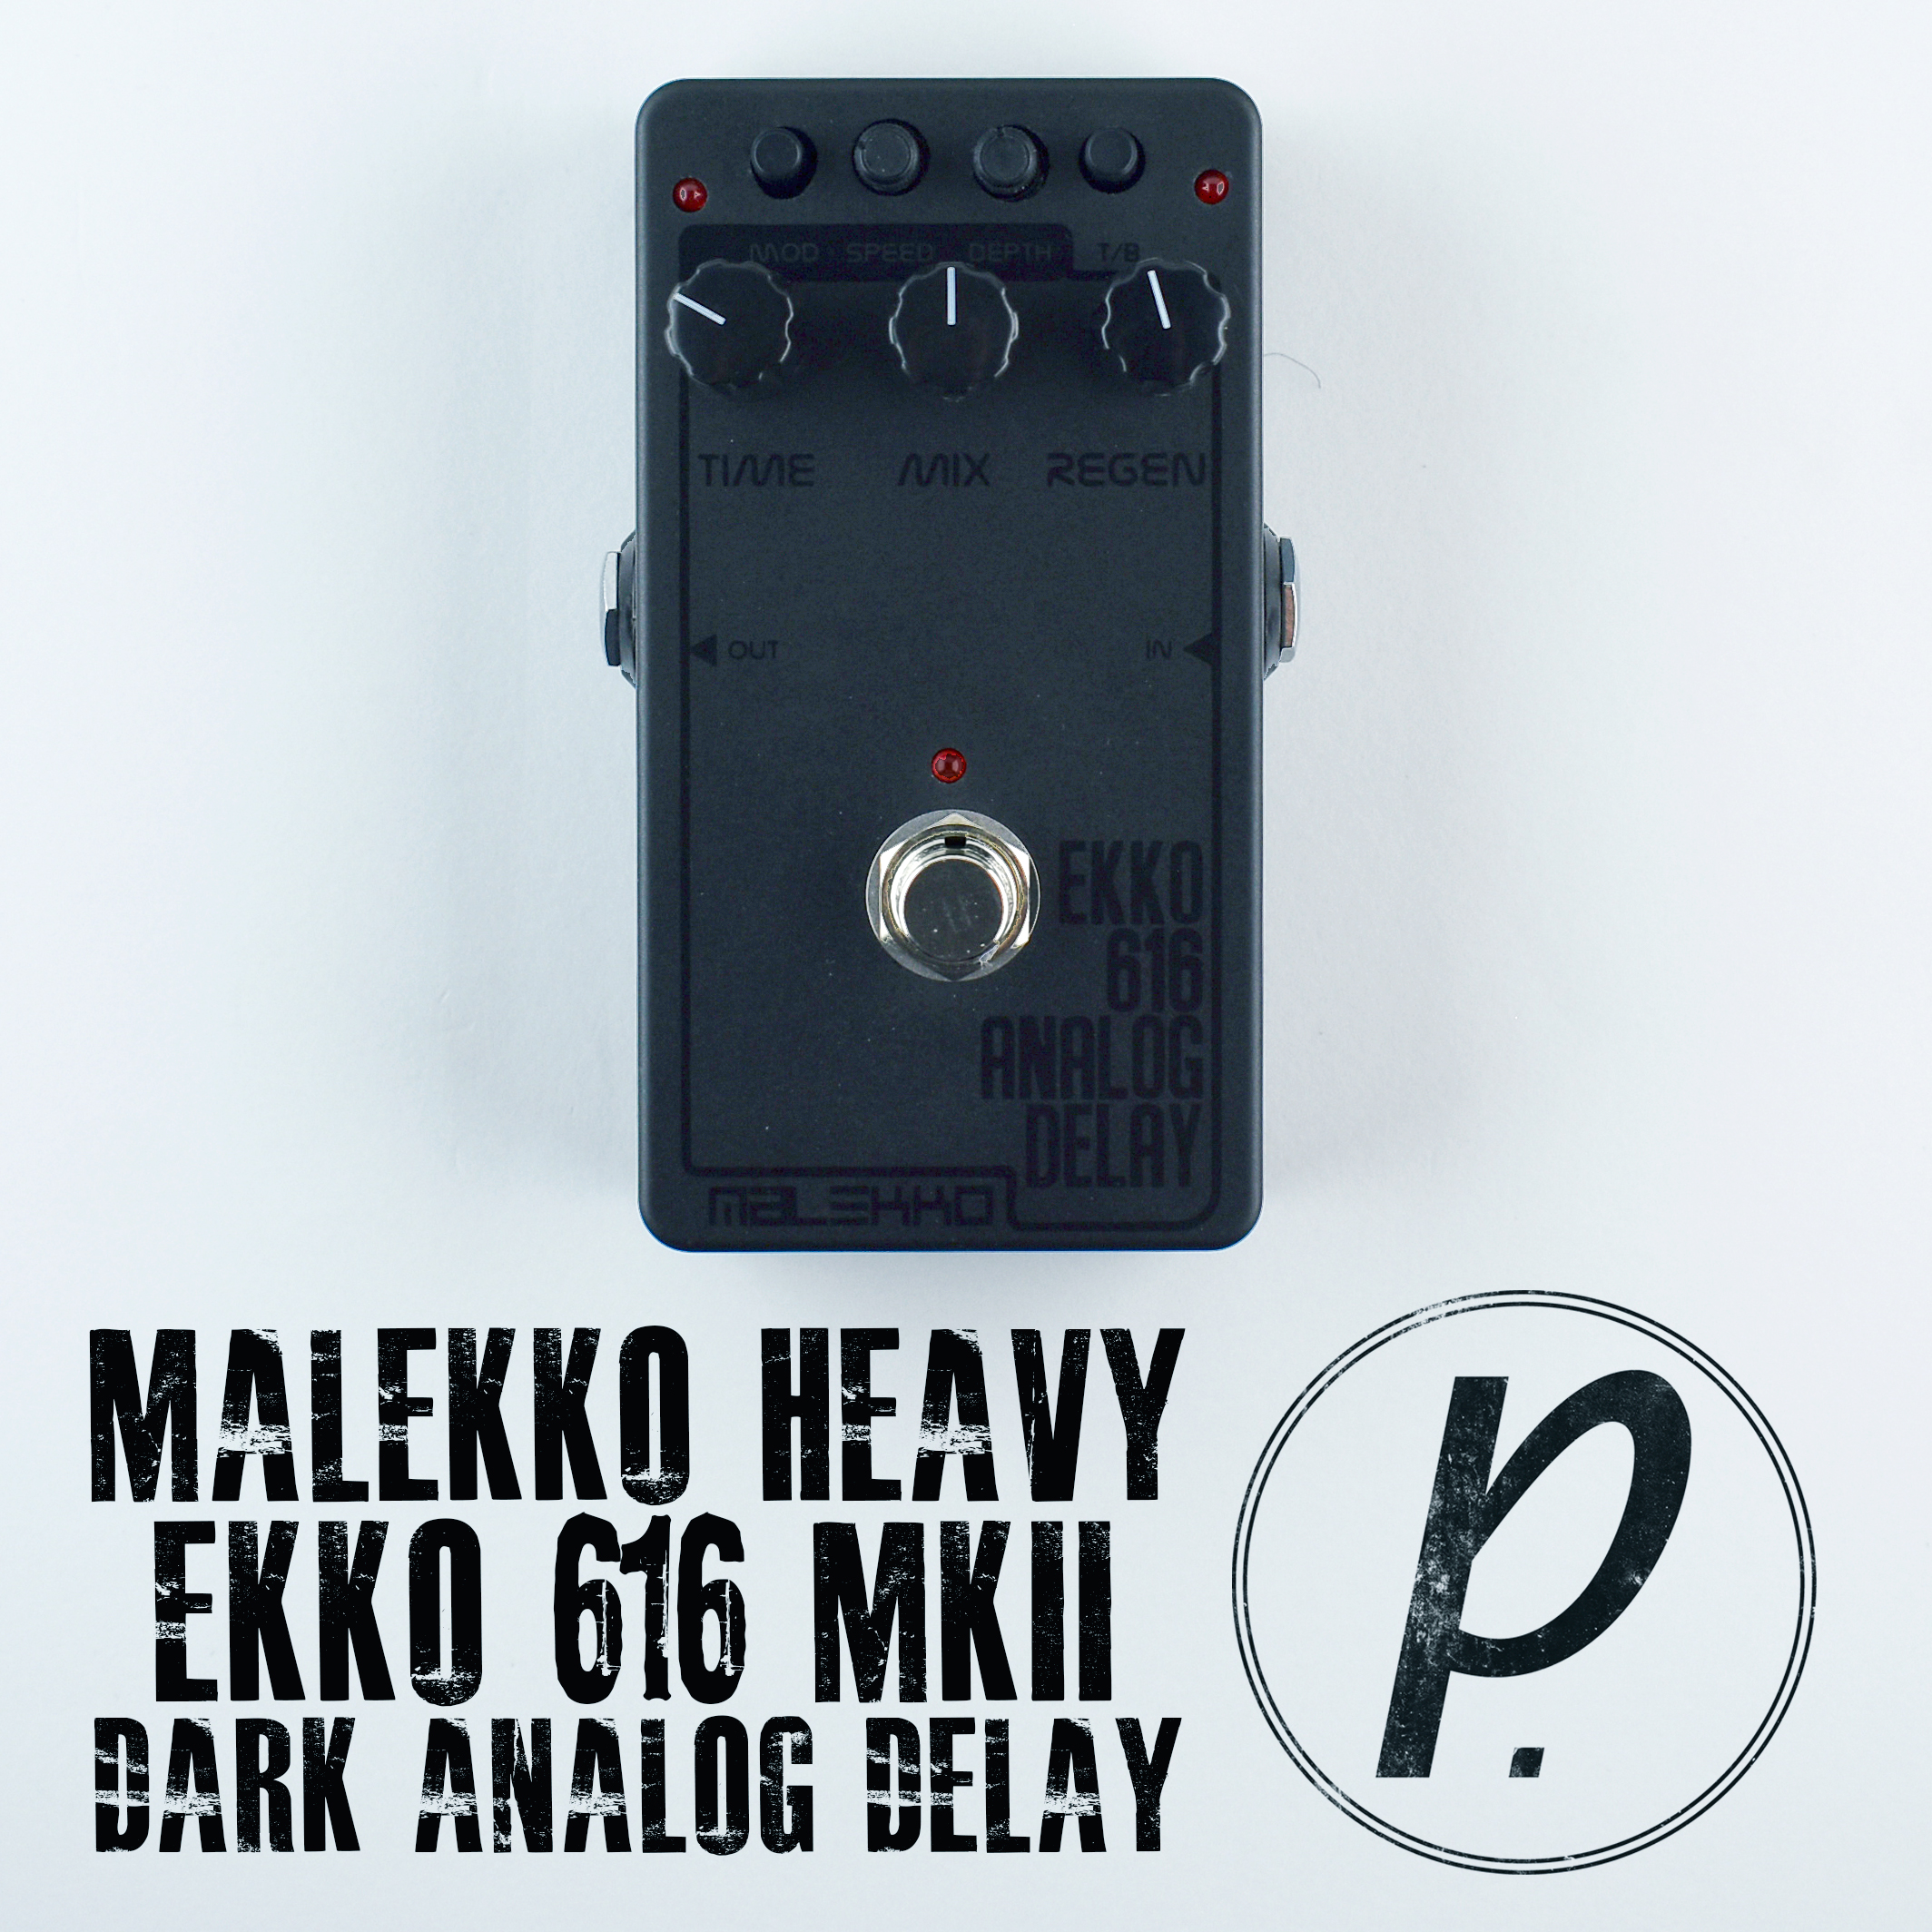 Malekko Heavy Industry EKKO 616 DARK